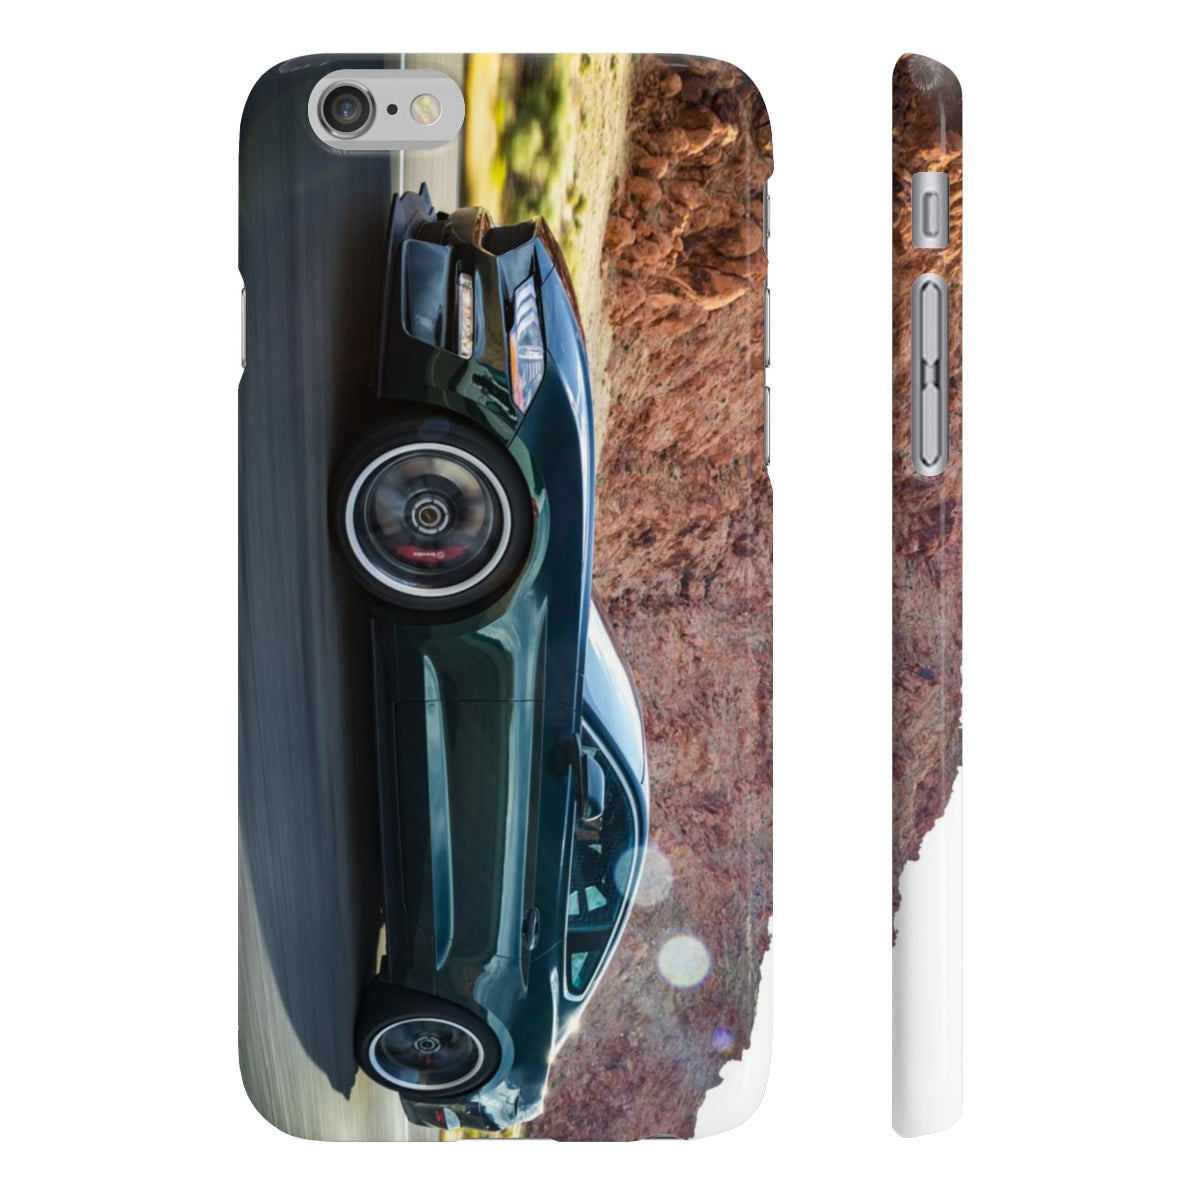 Steeda Steve McQueen Limited Edition Bullitt Mustang Image Slim Phone Cases for iPhone 6, 7 & 8